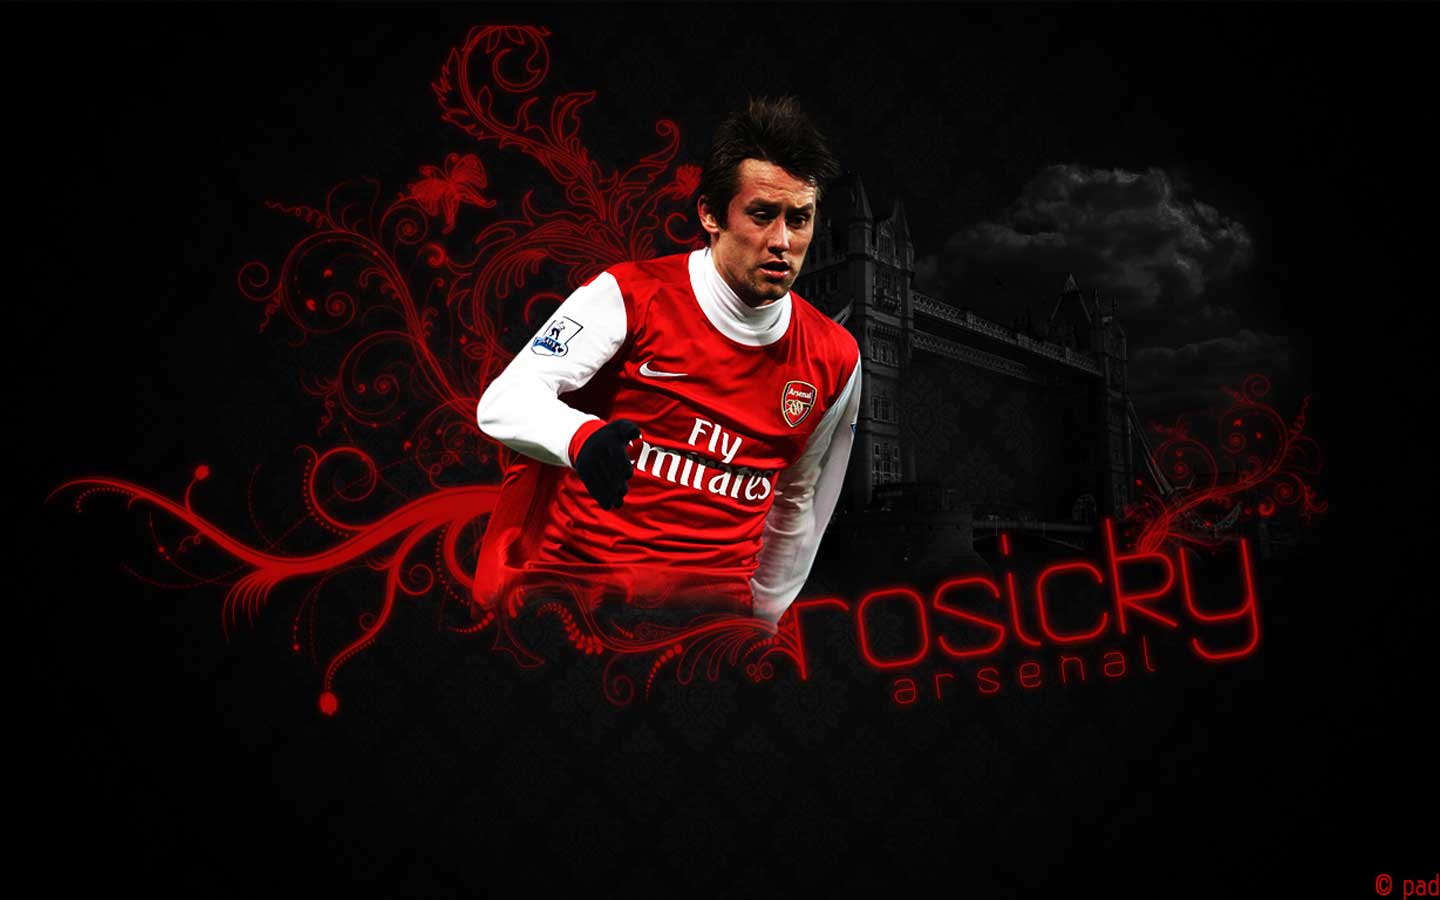 Tomas Rosicky Arsenal Wallpaper HD 2013. Football Wallpaper HD